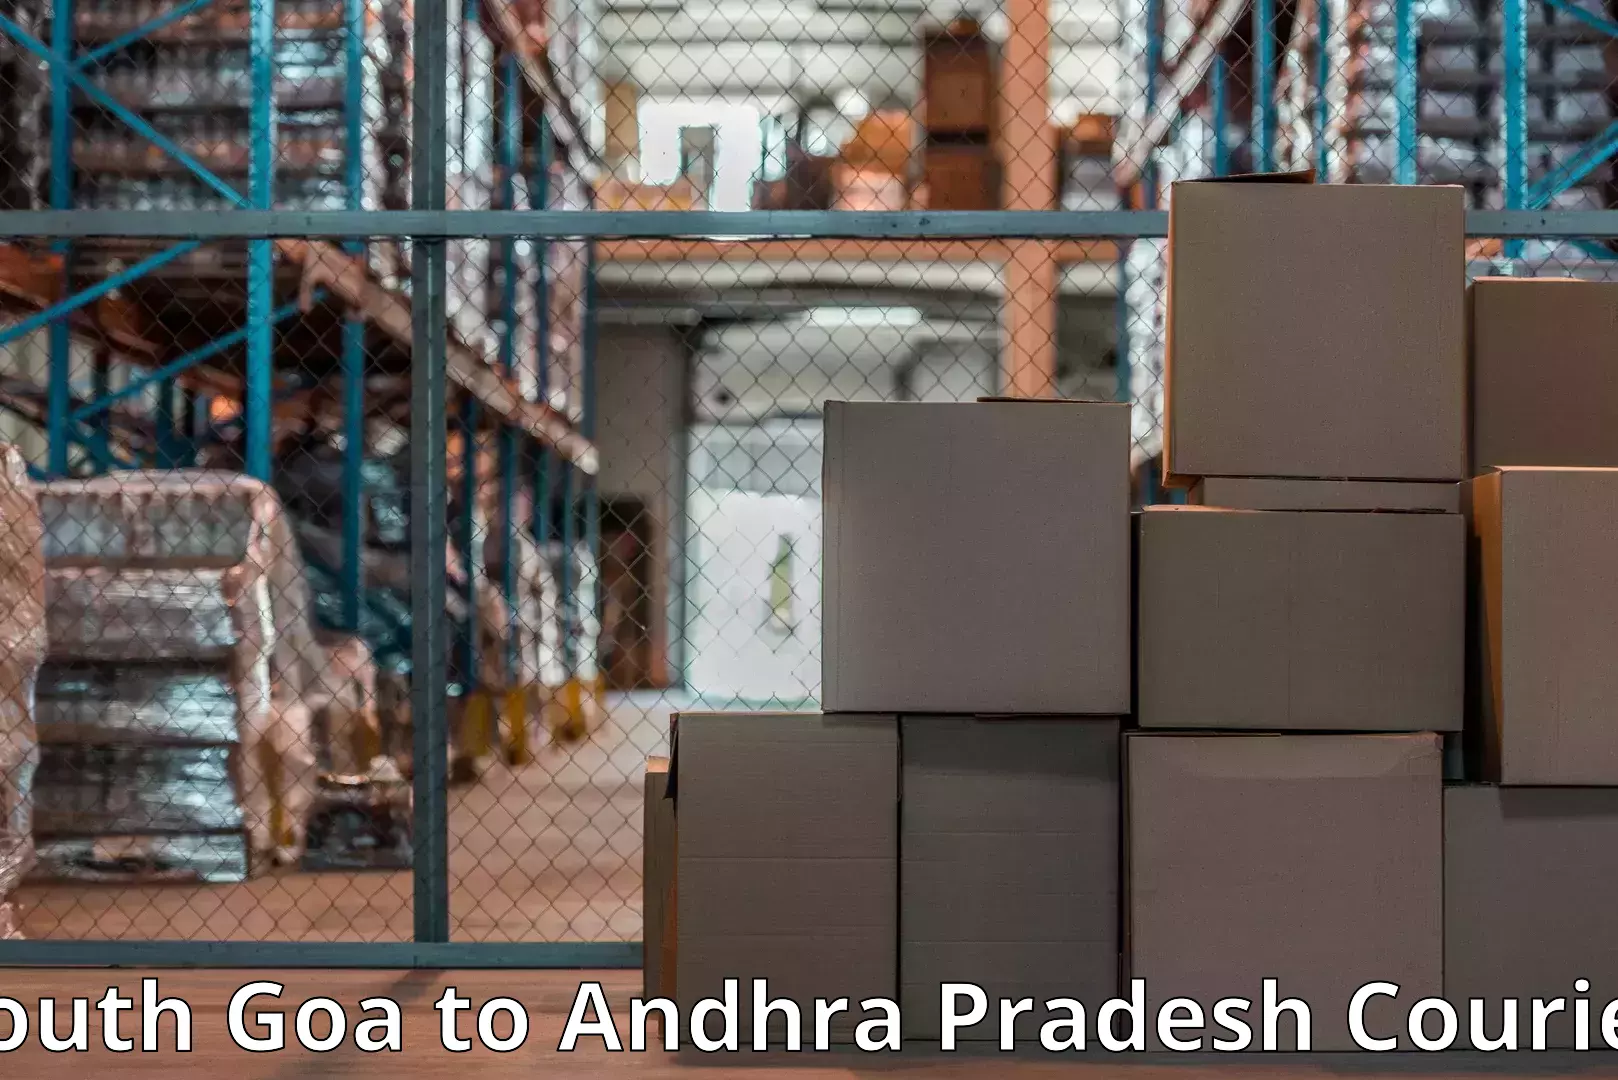 Quality moving company South Goa to Madakasira